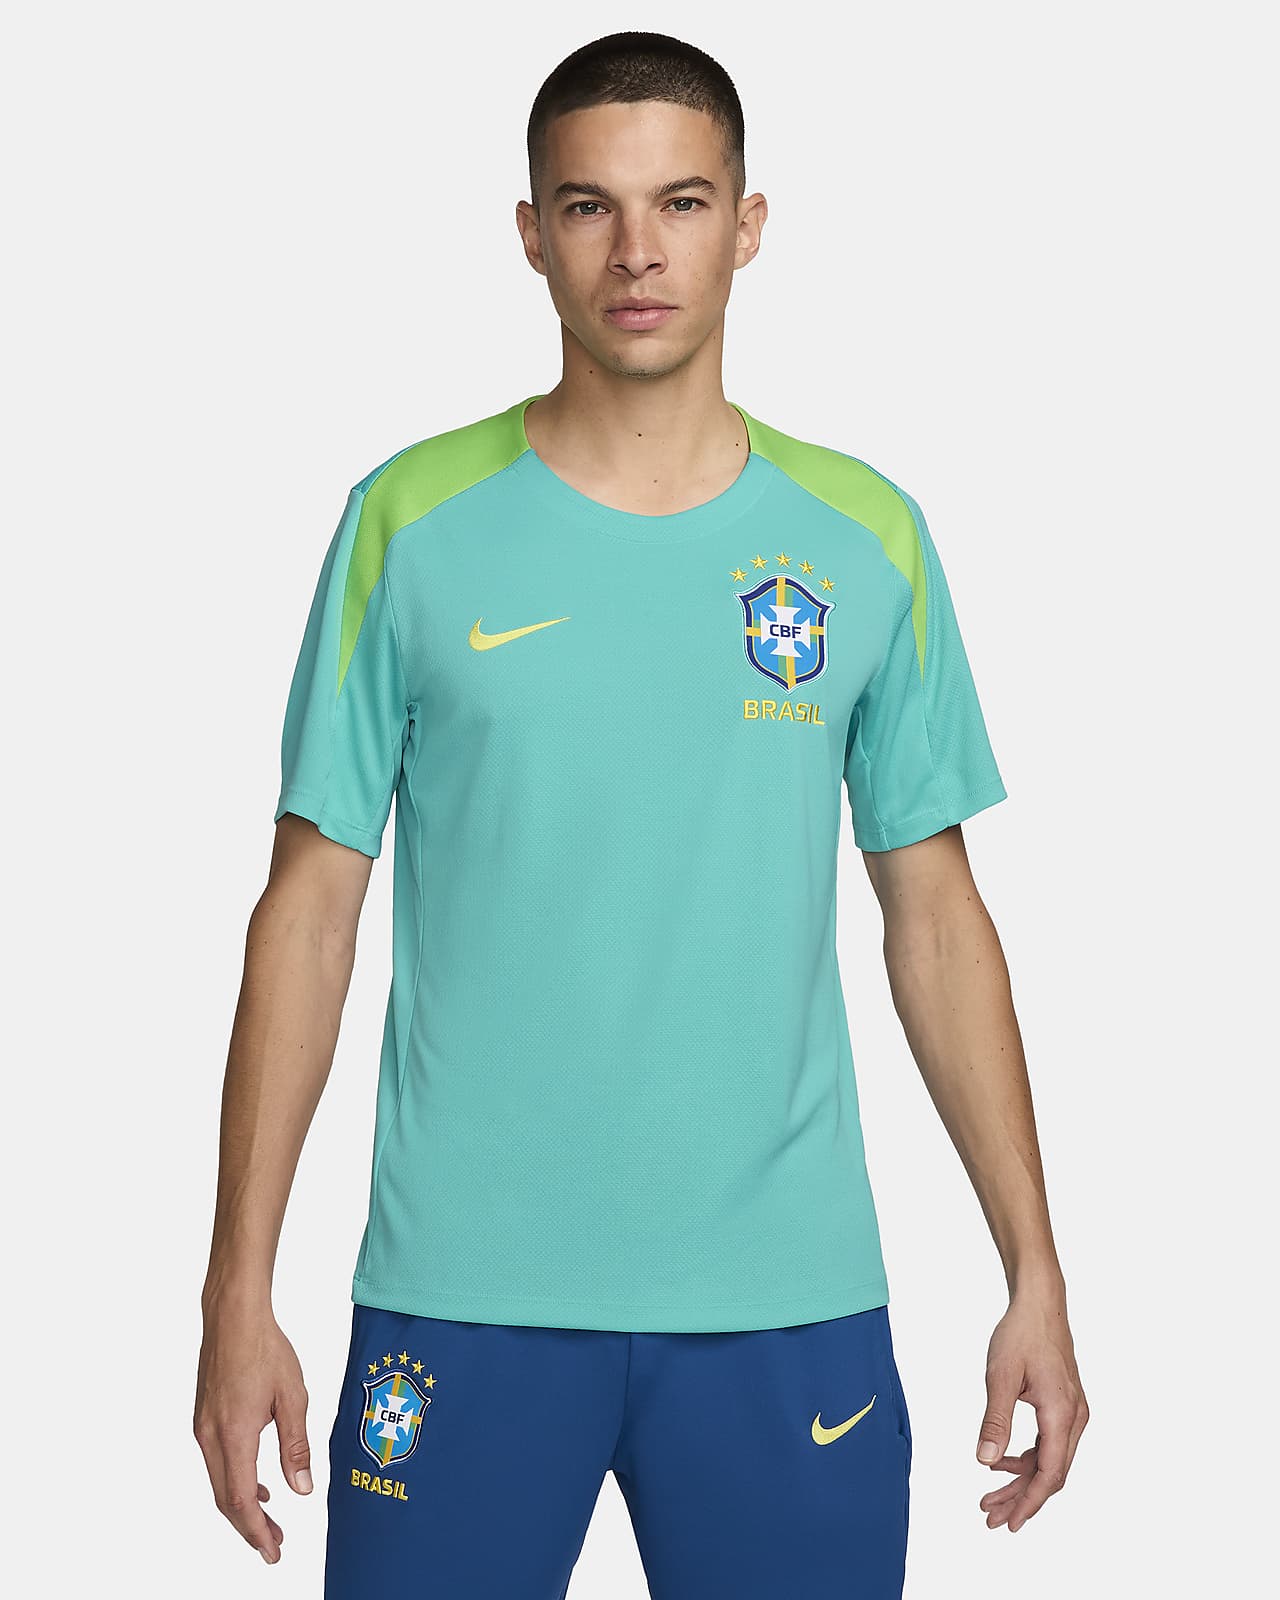 Brazil Strike Men's Nike Dri-FIT Soccer Short-Sleeve Knit Top